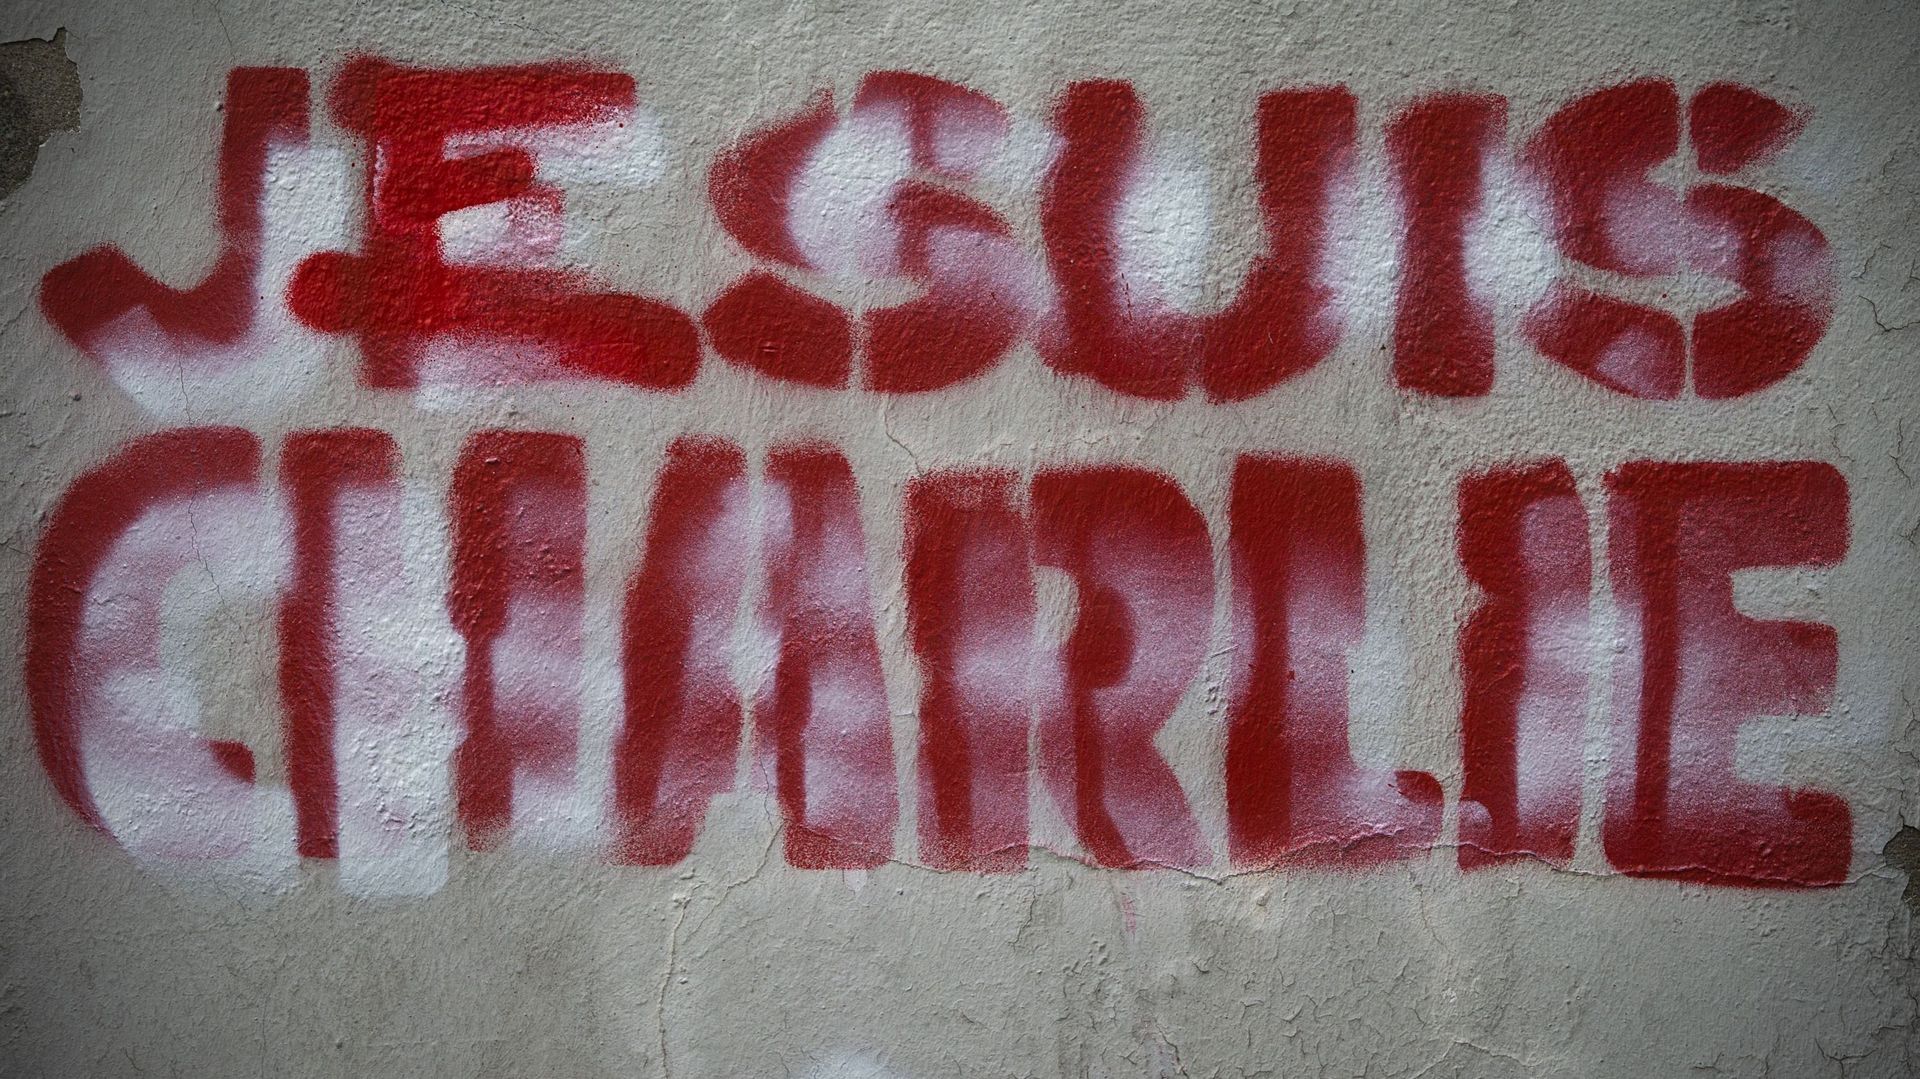 Graffiti "Je suis Charlie"